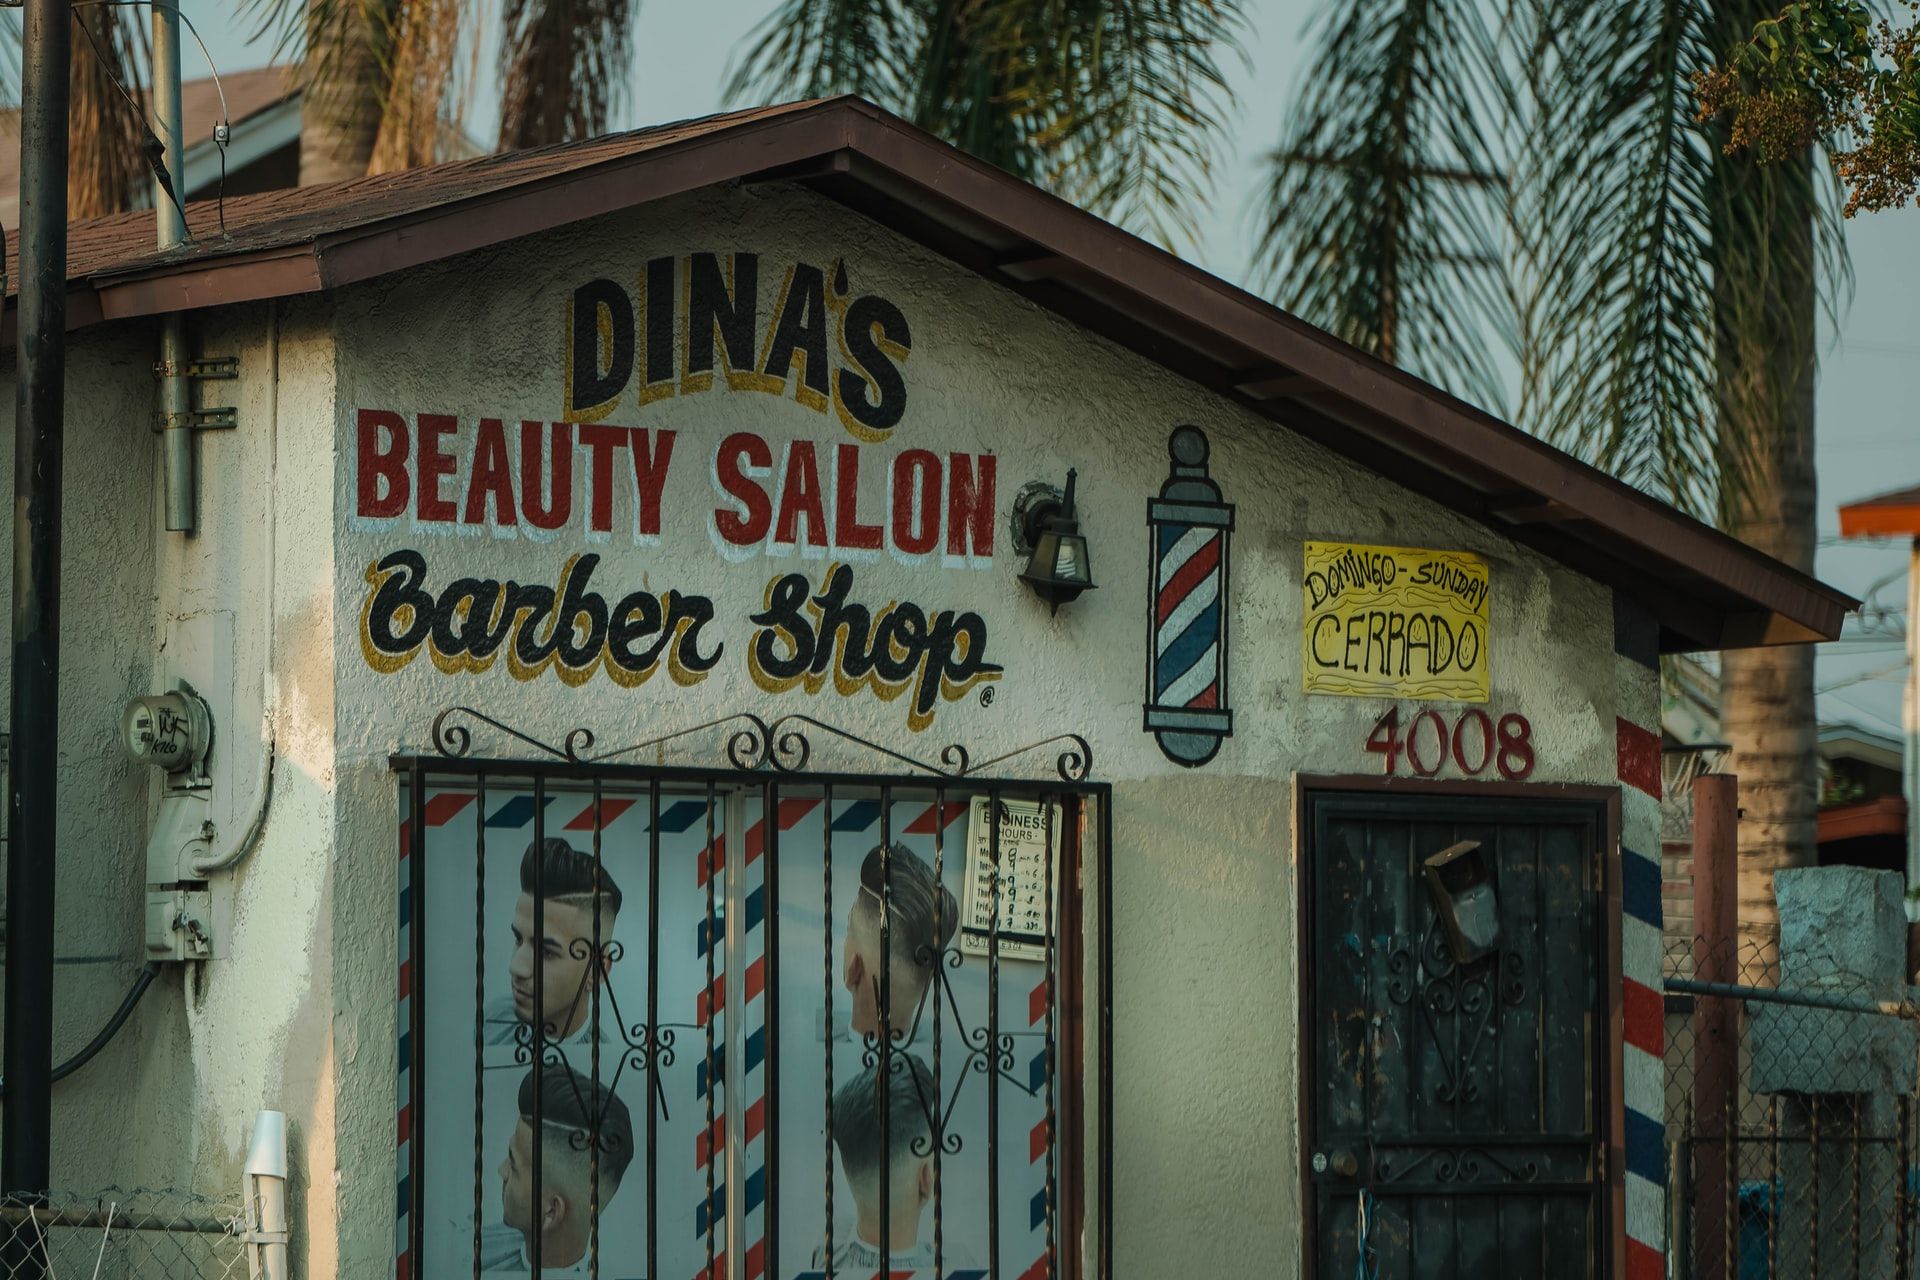 Beauty salon or barbershop